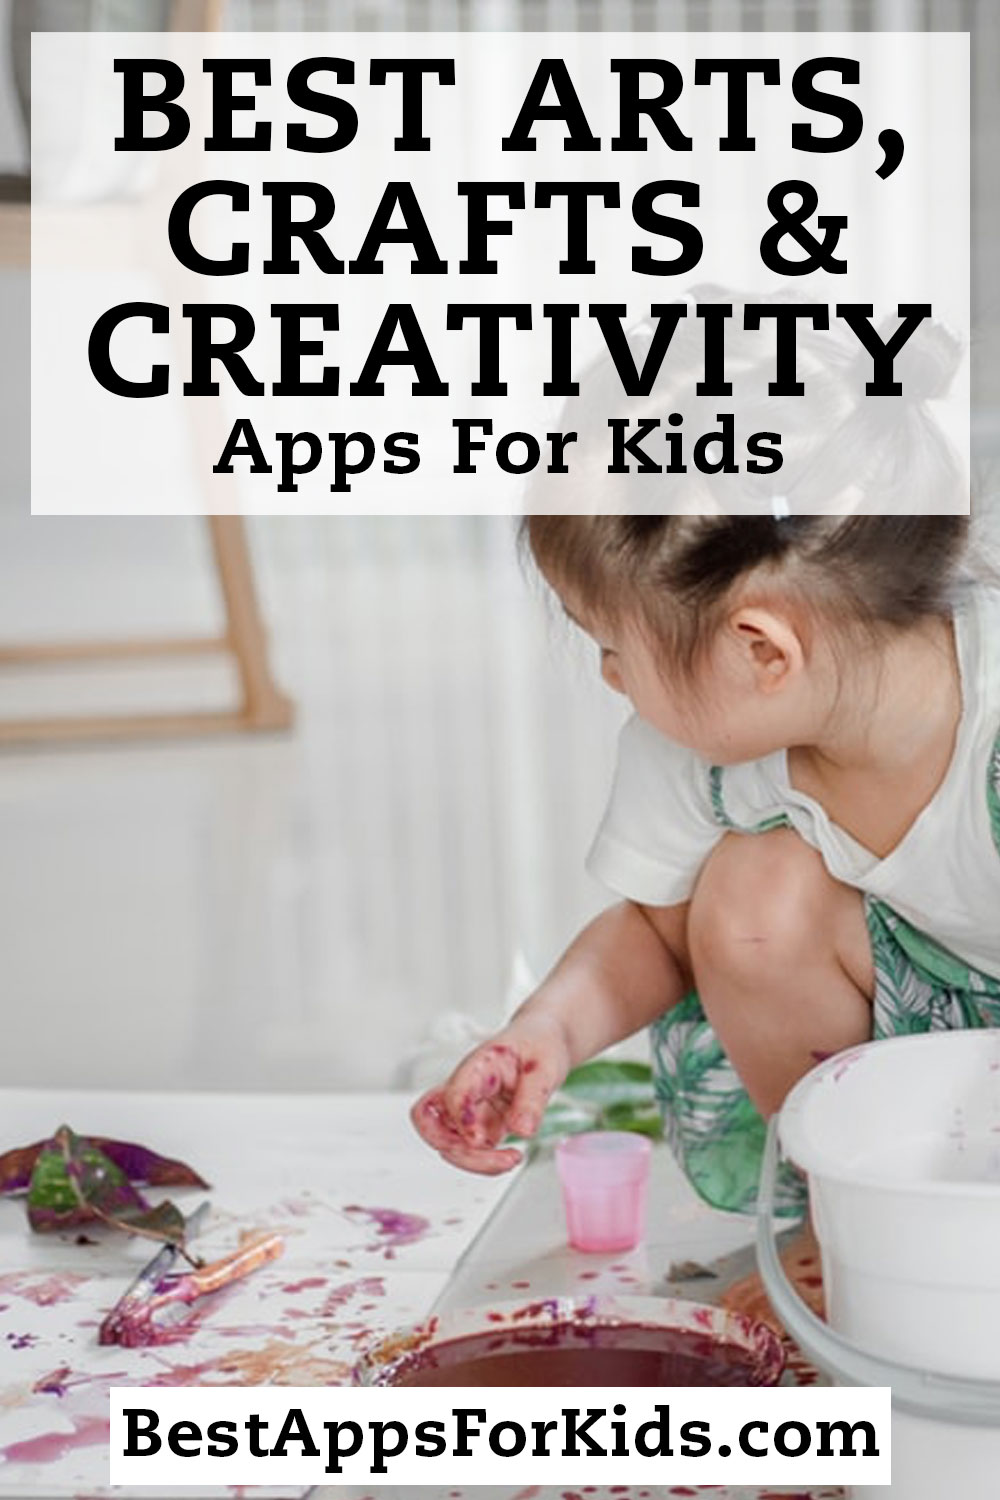 Best Arts, Crafts & Creativity Apps for Kids / 2020 Update